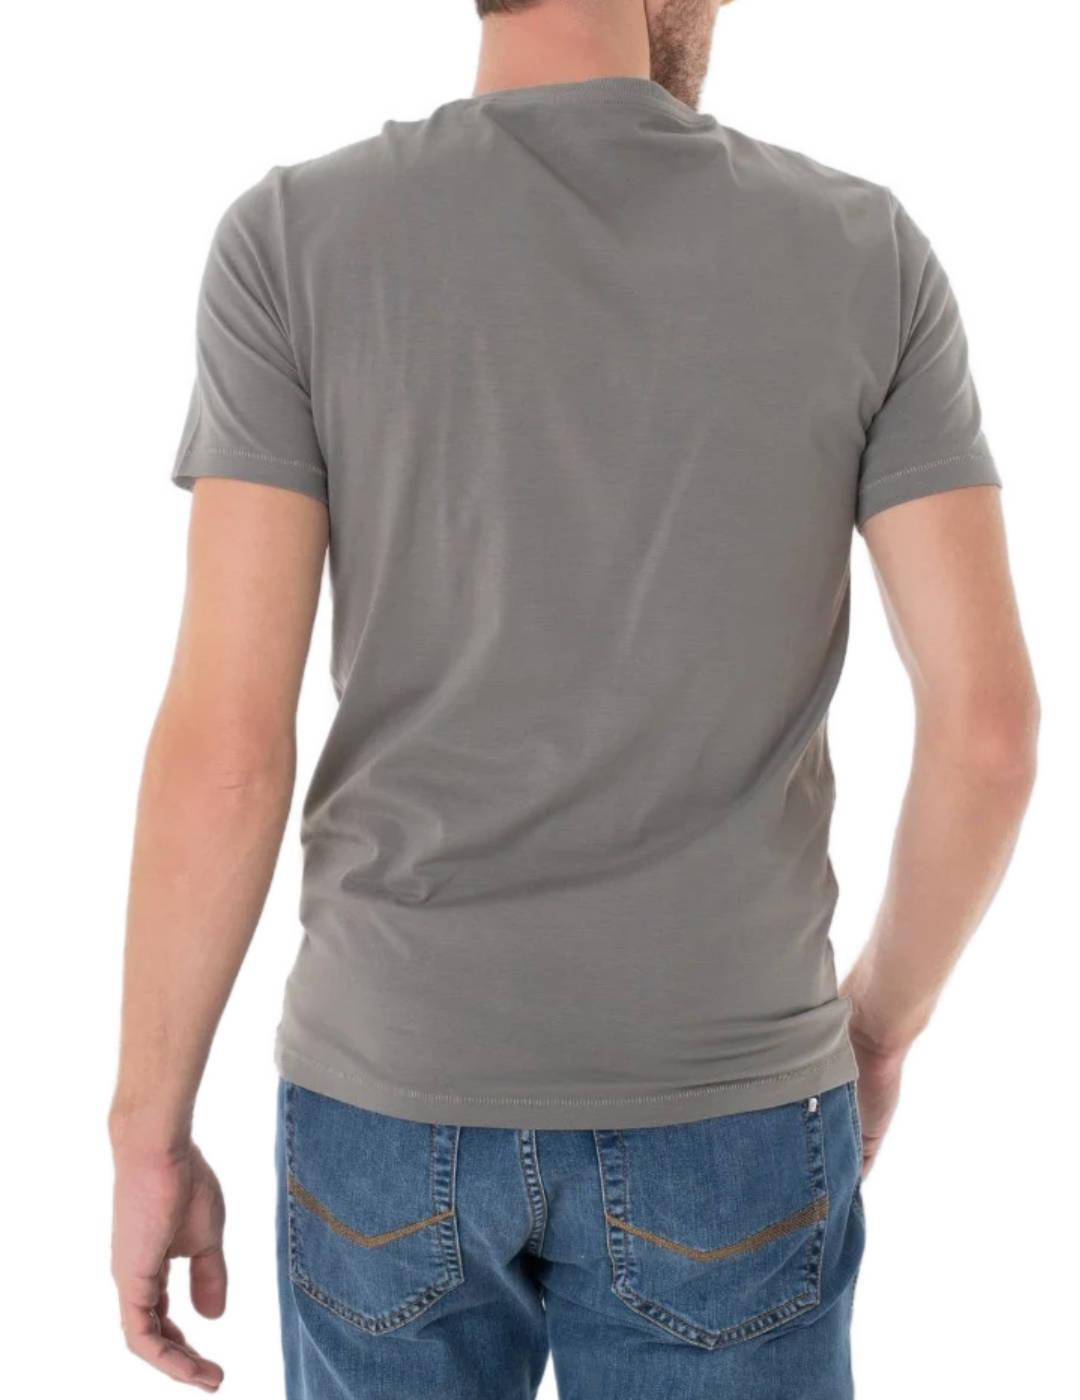 Camiseta Guess Ermak gris claro de manga corta para hombre